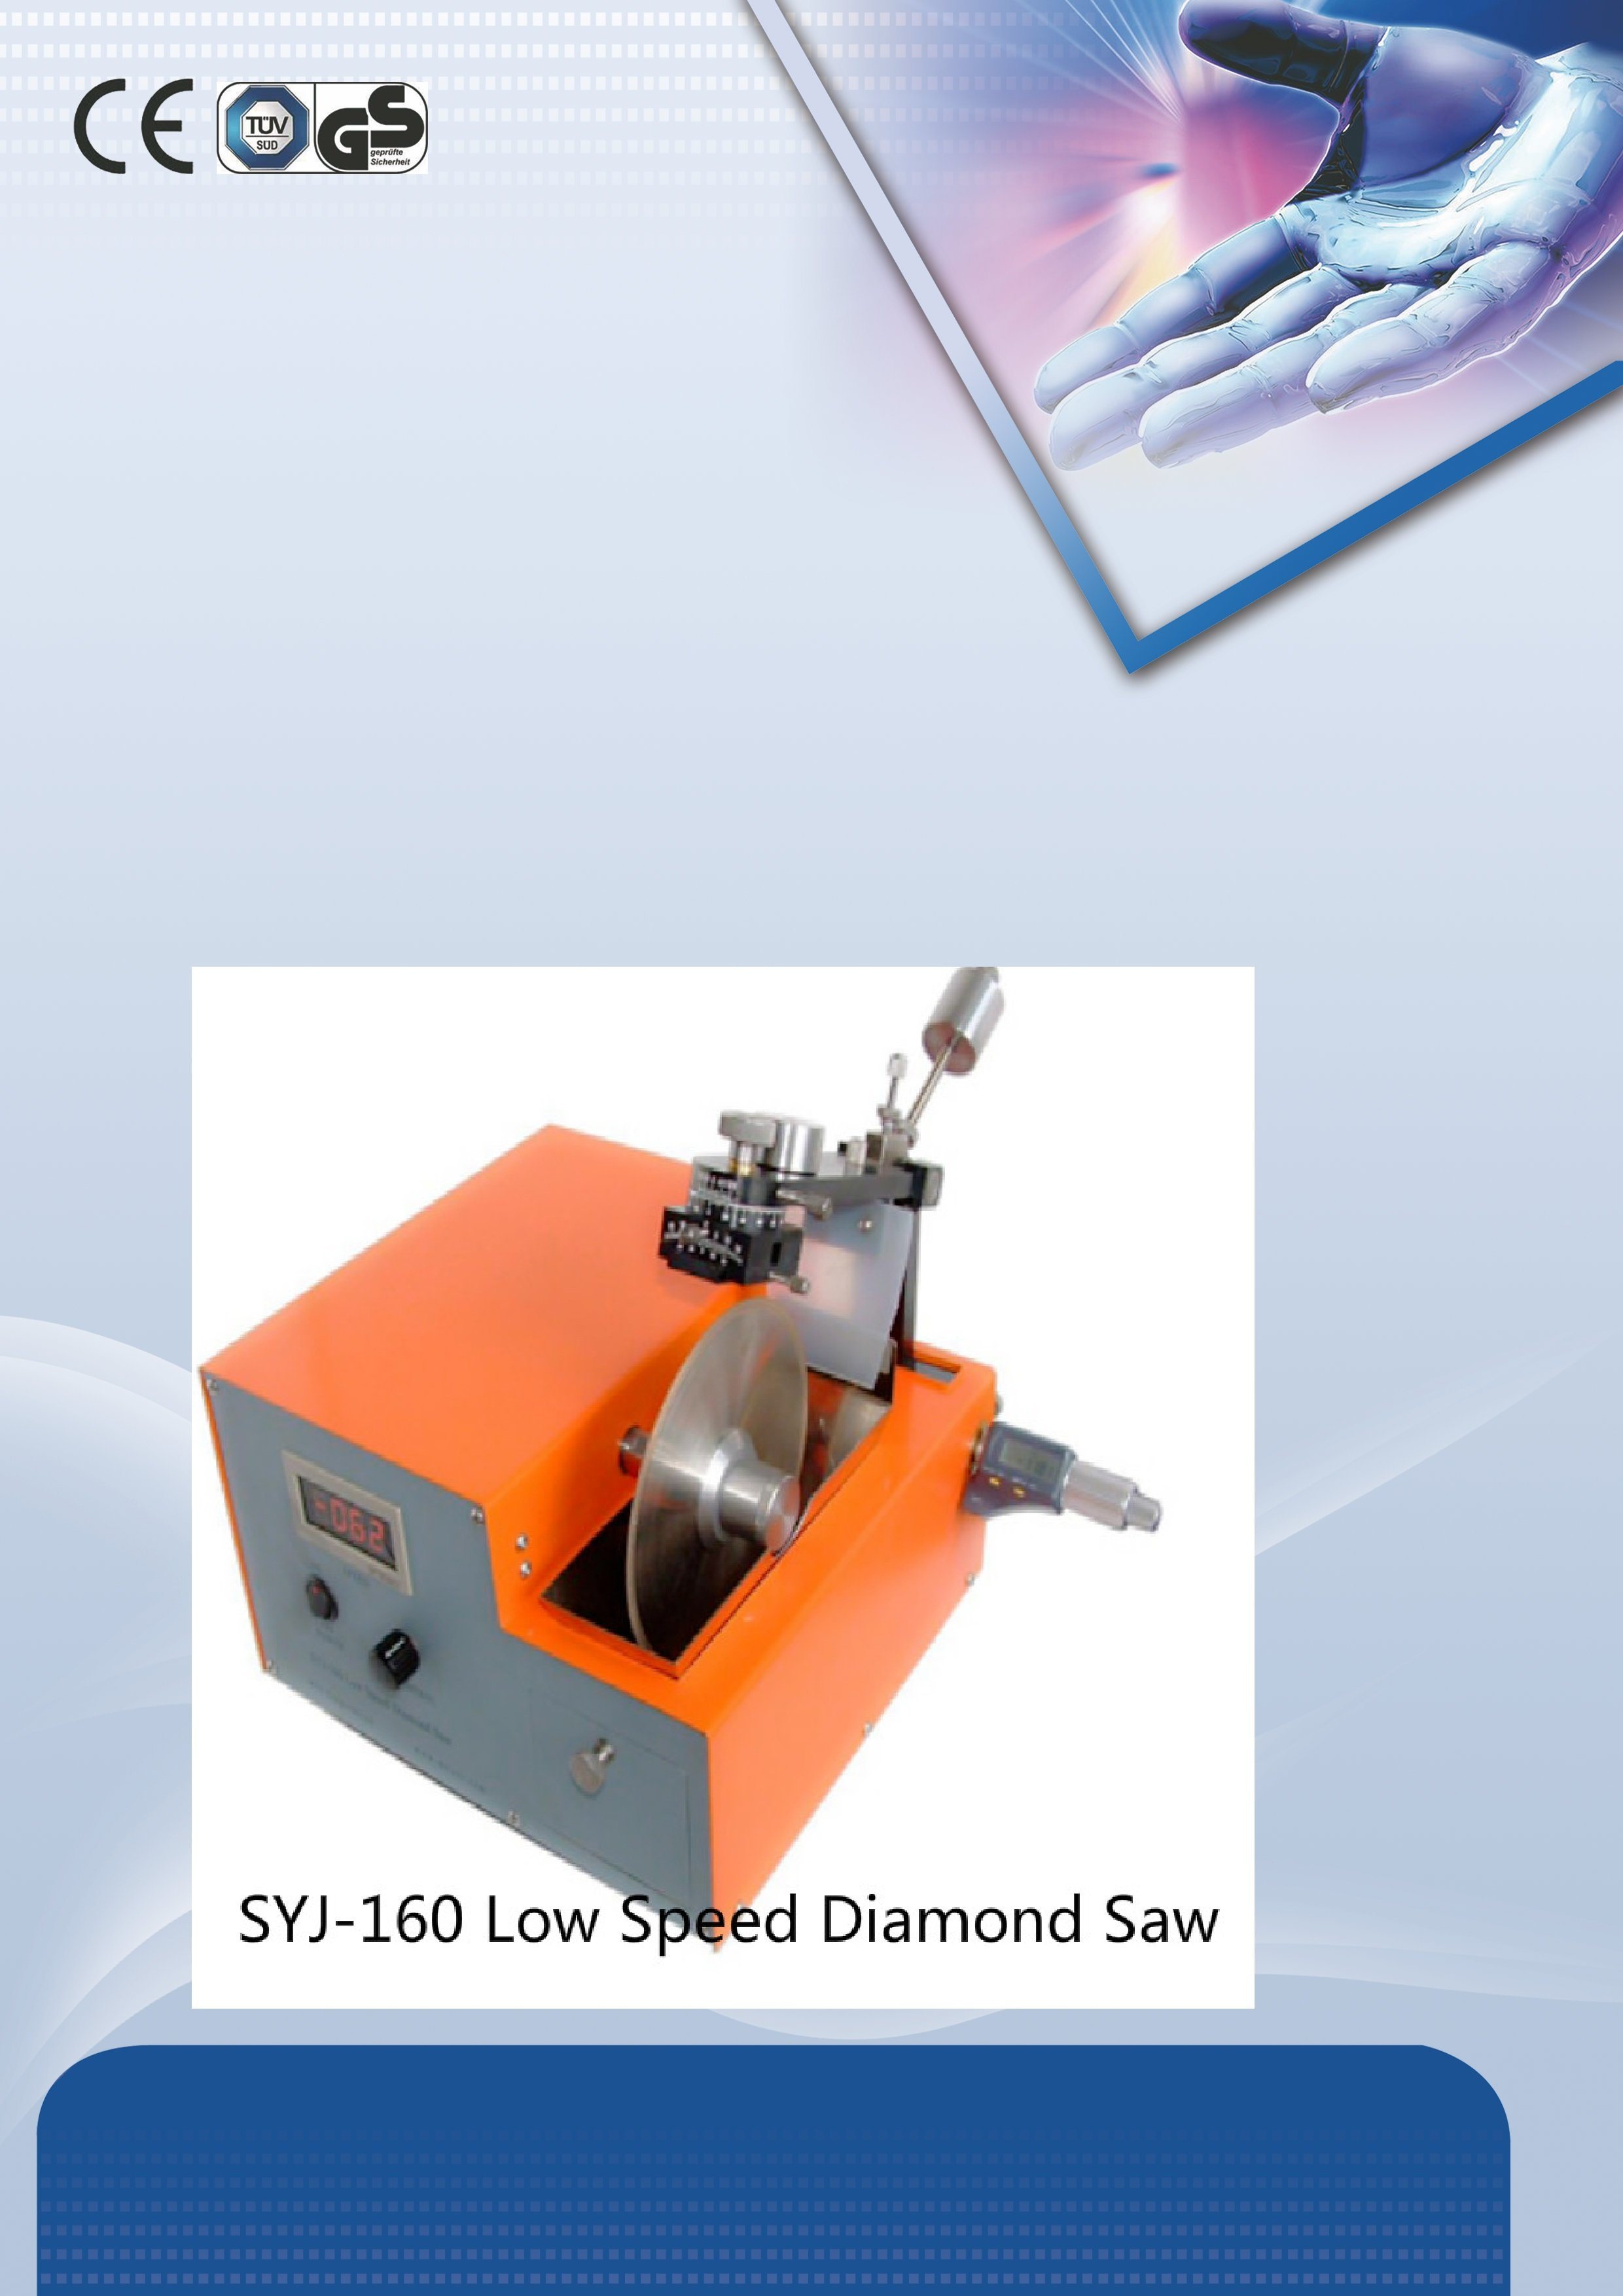 Syj-160 Low Speed Diamond Saw